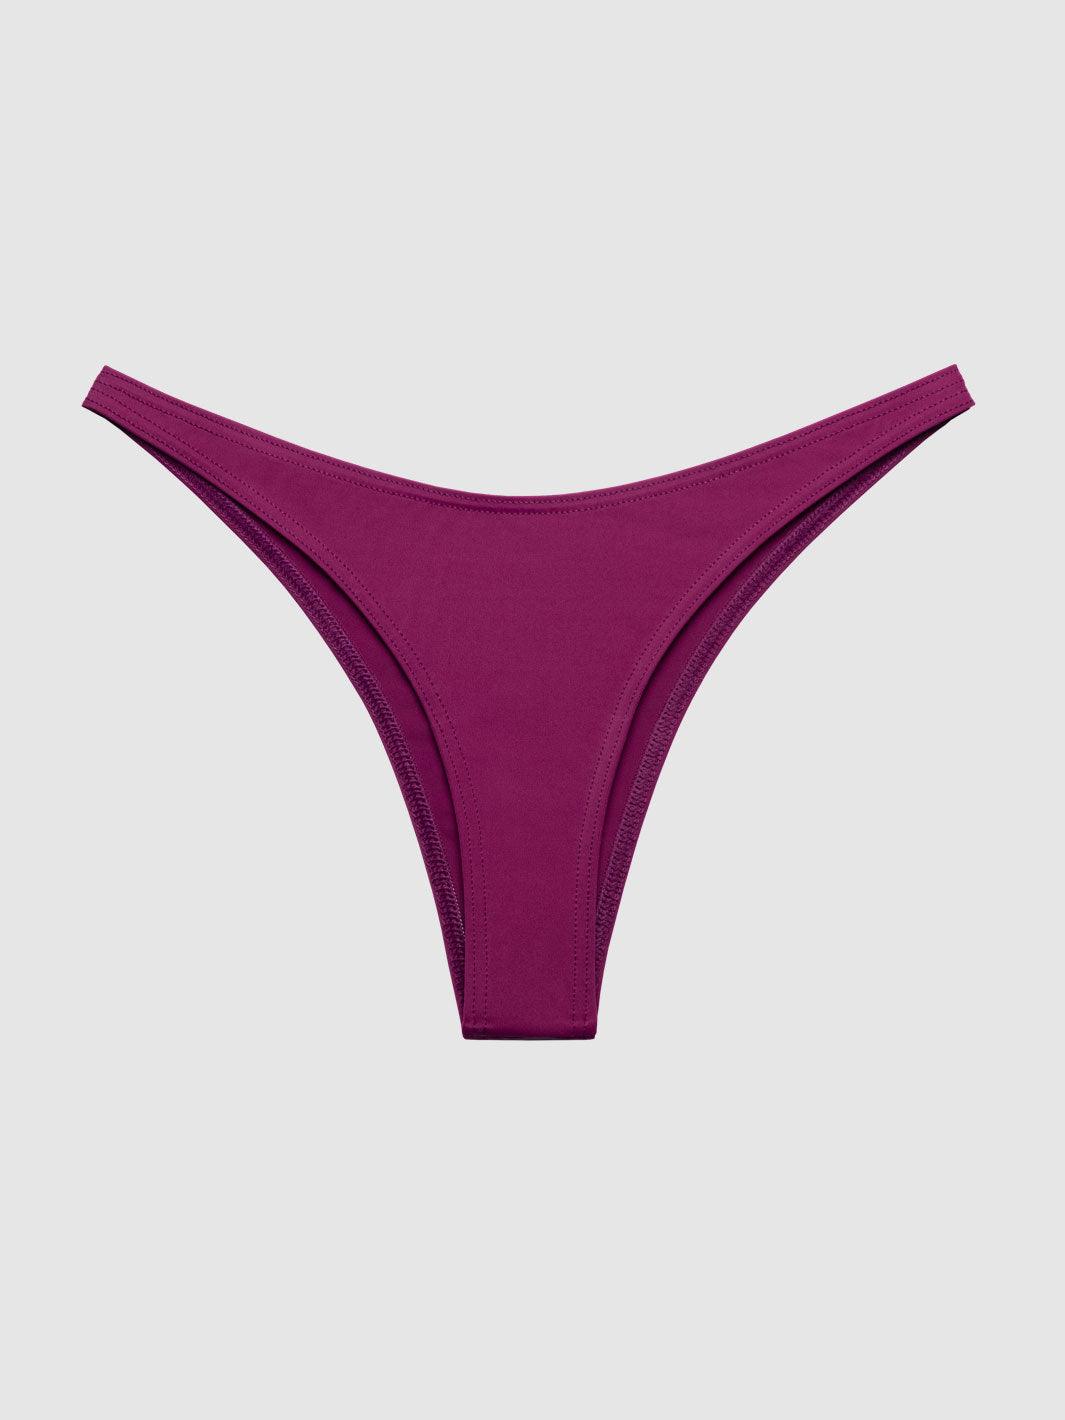 penelope brazil bikini slip grape purple - masarà